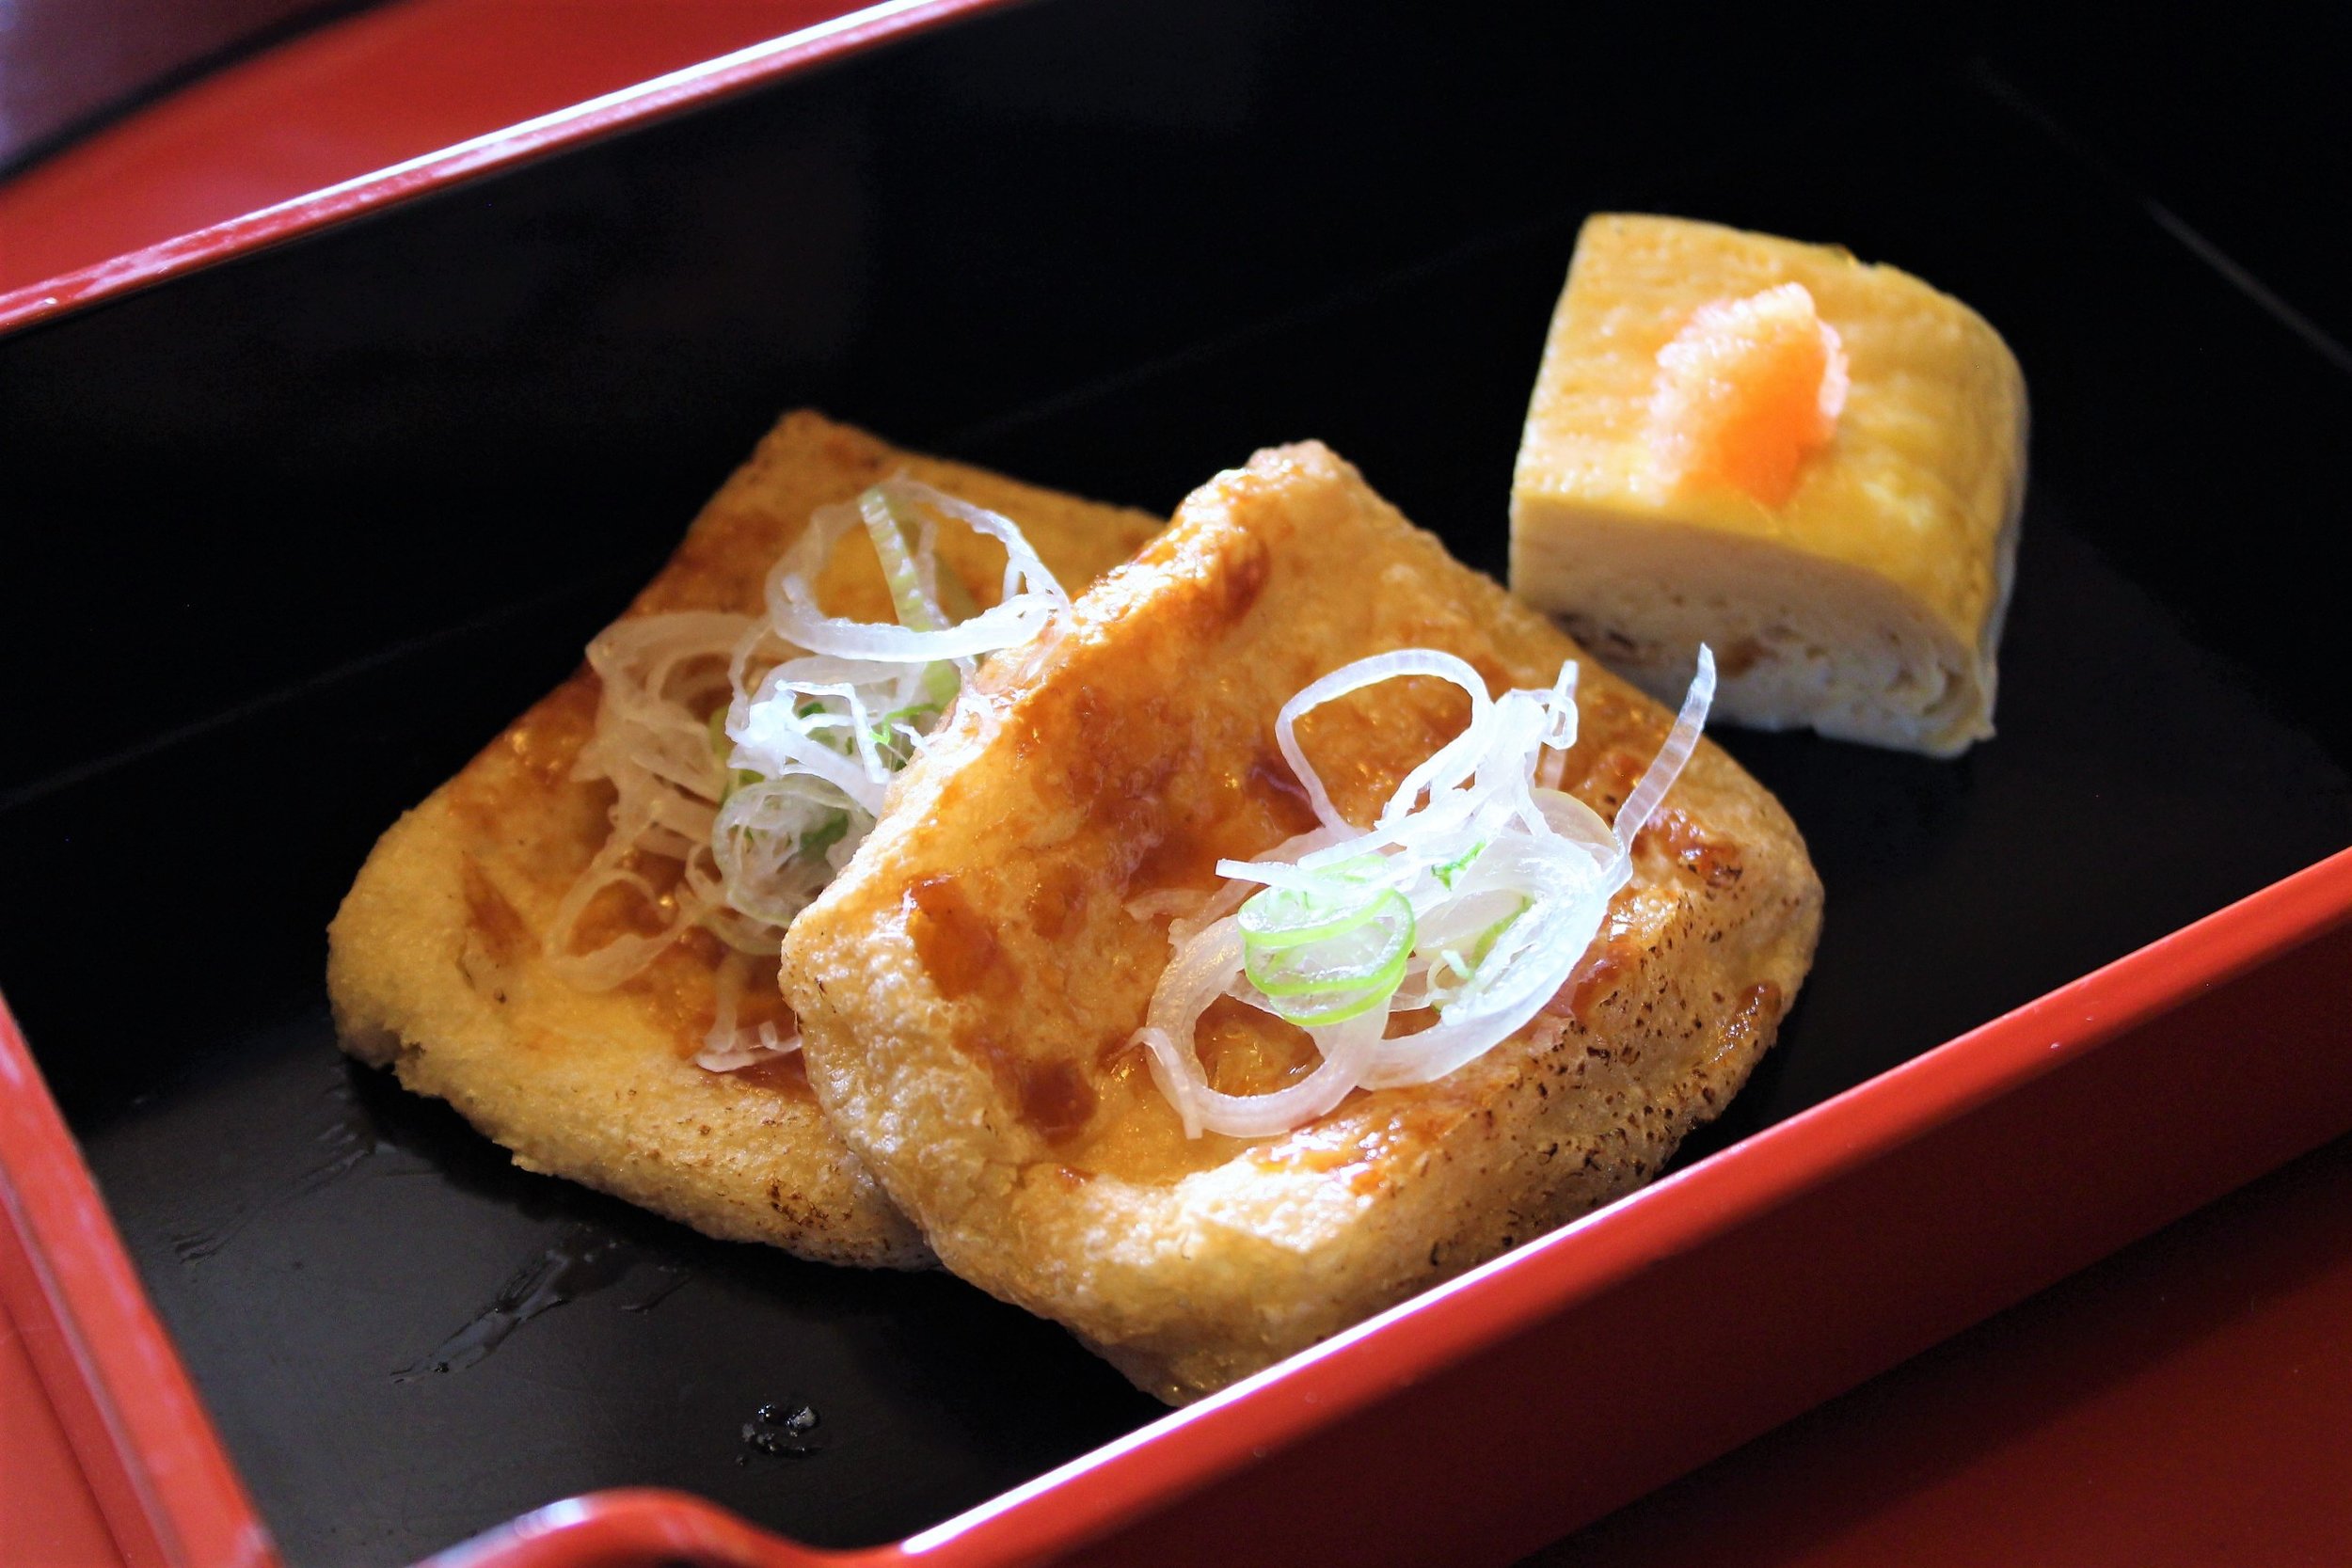 Age Dengaku Deep Fried Tofu Coated with Miso and Scallions at Tokyo Shiba Tofuya Ukai in Tokyo, Japan